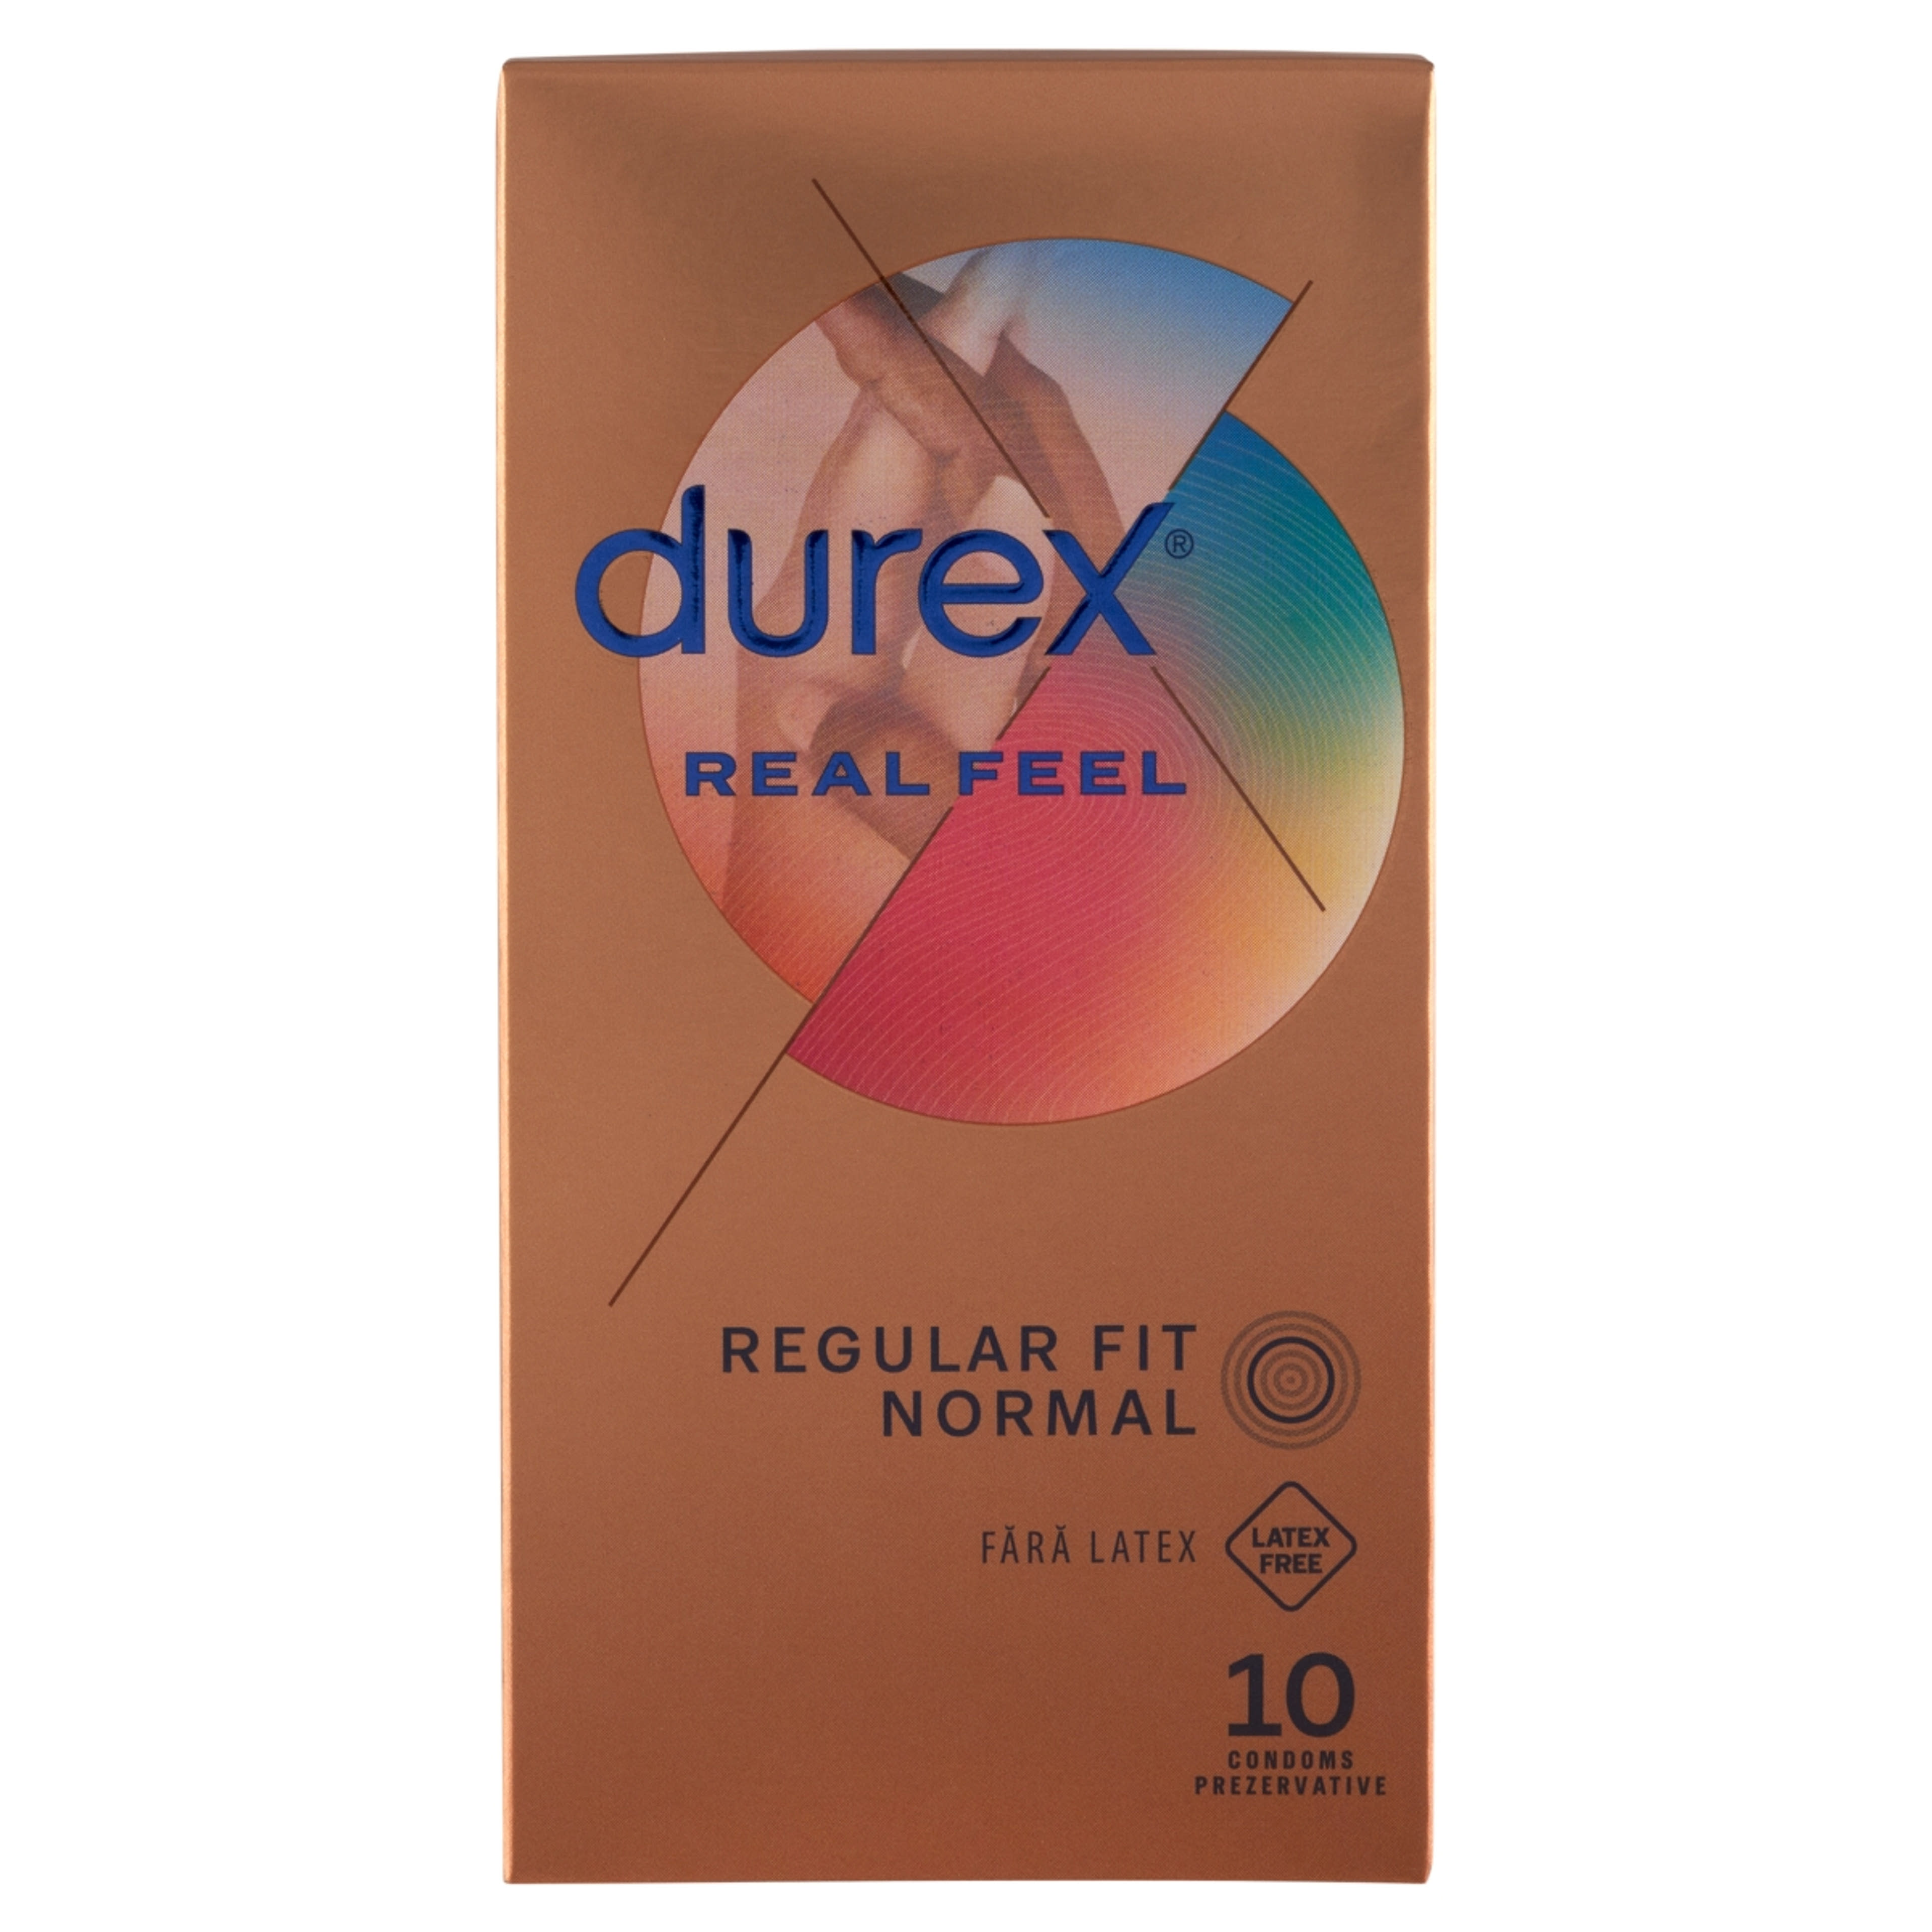 Durex Real feel óvszer - 10 db-1